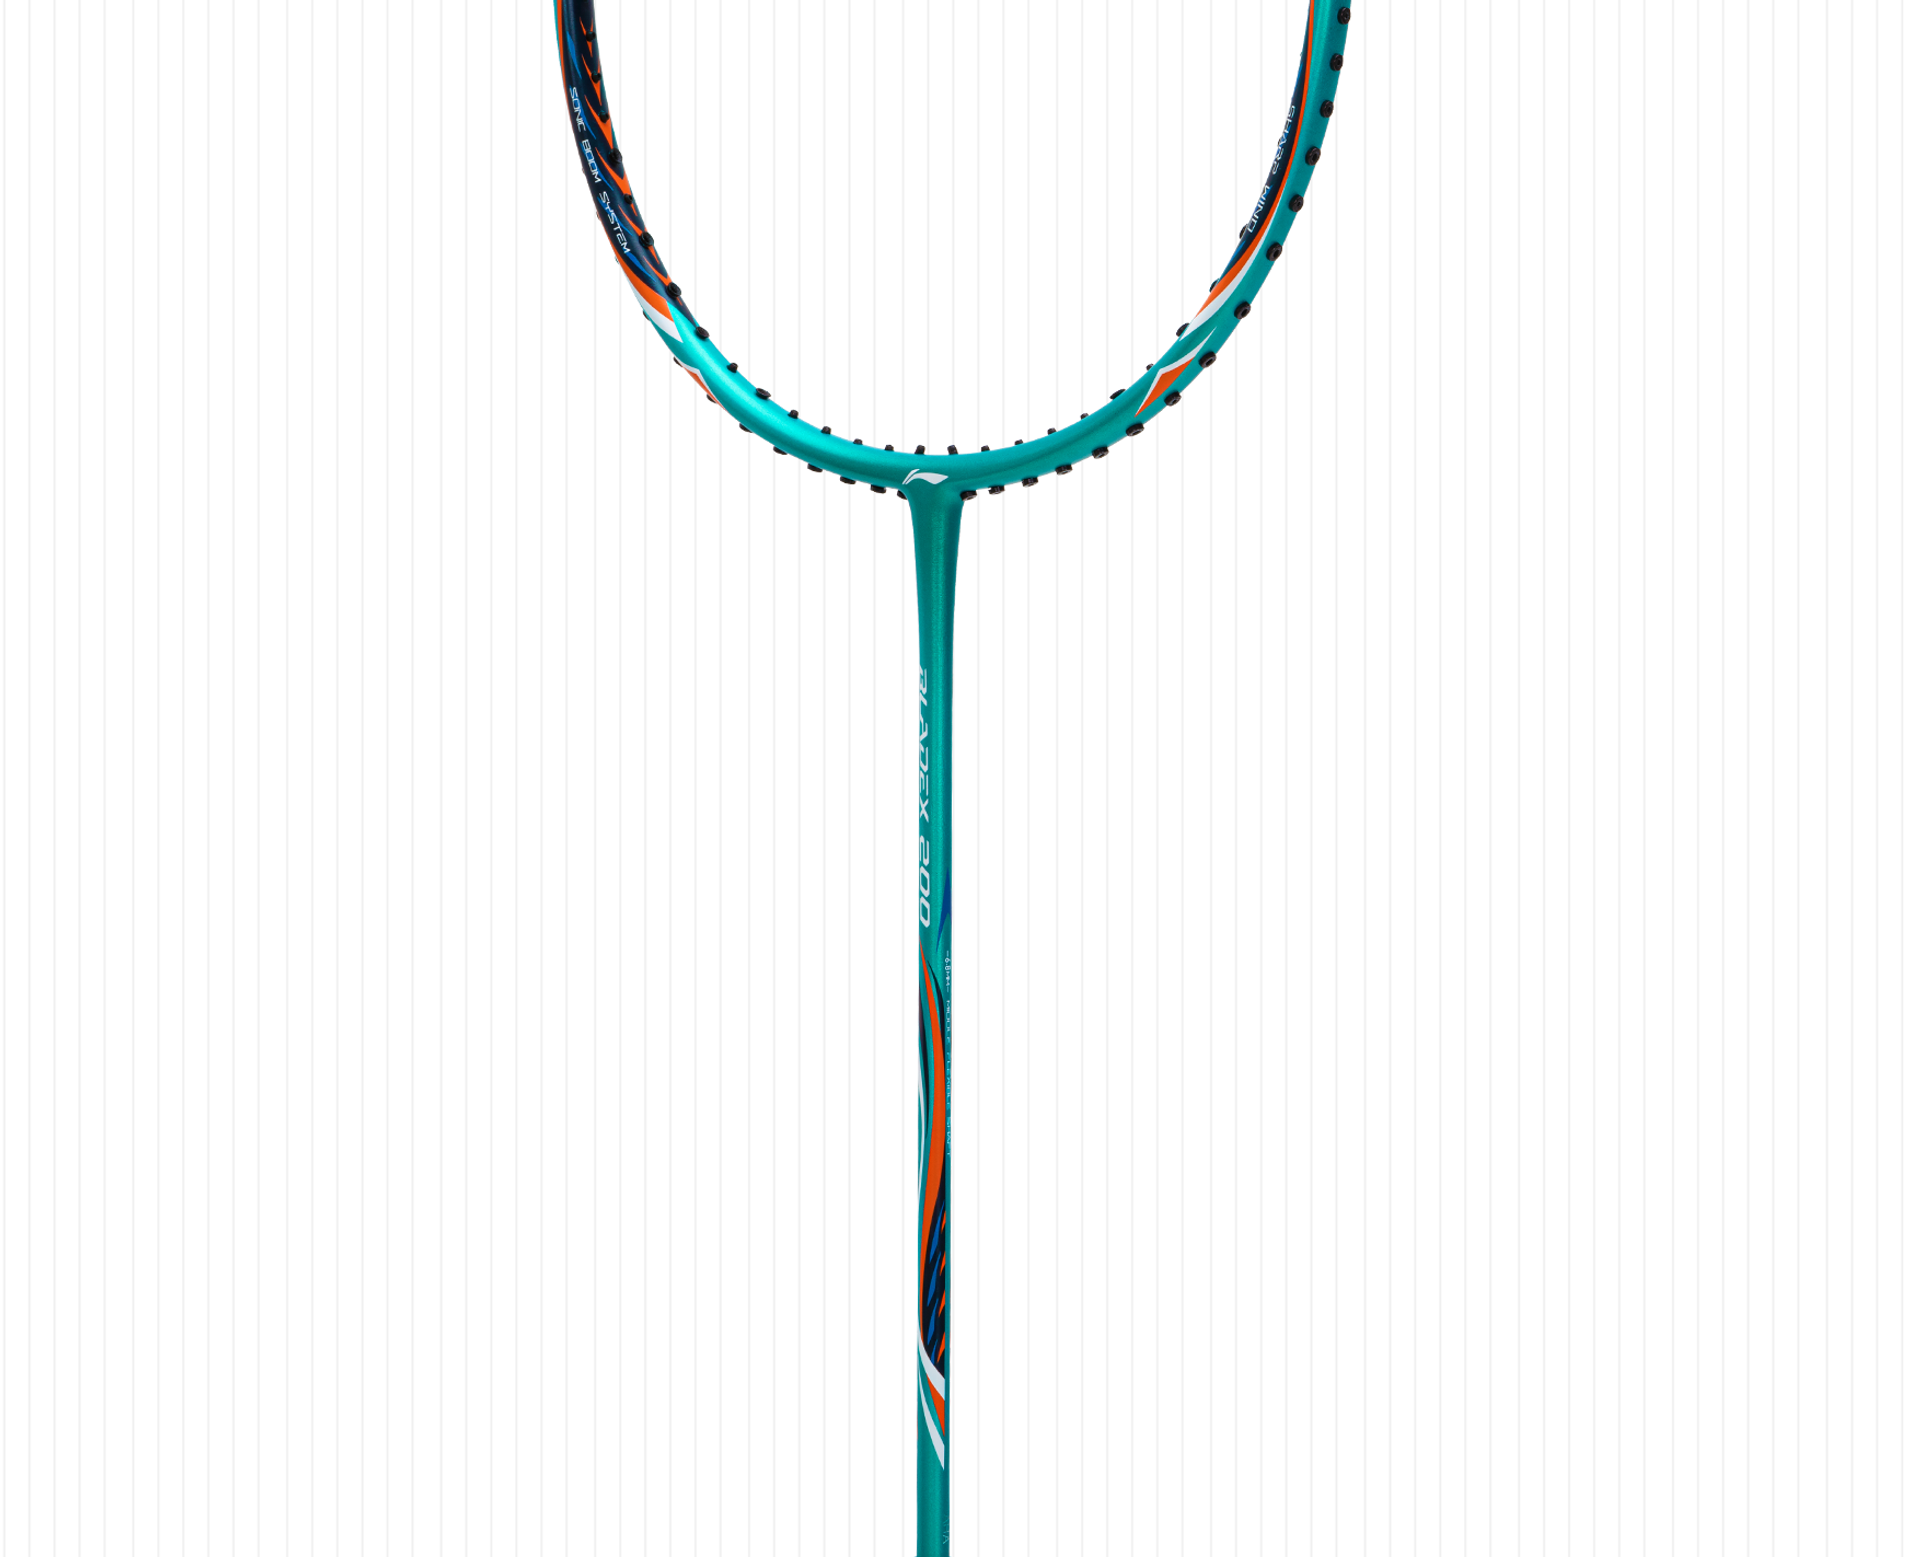 Close up view of Blade X 200 Badminton racket frame by Li-Ning Studio